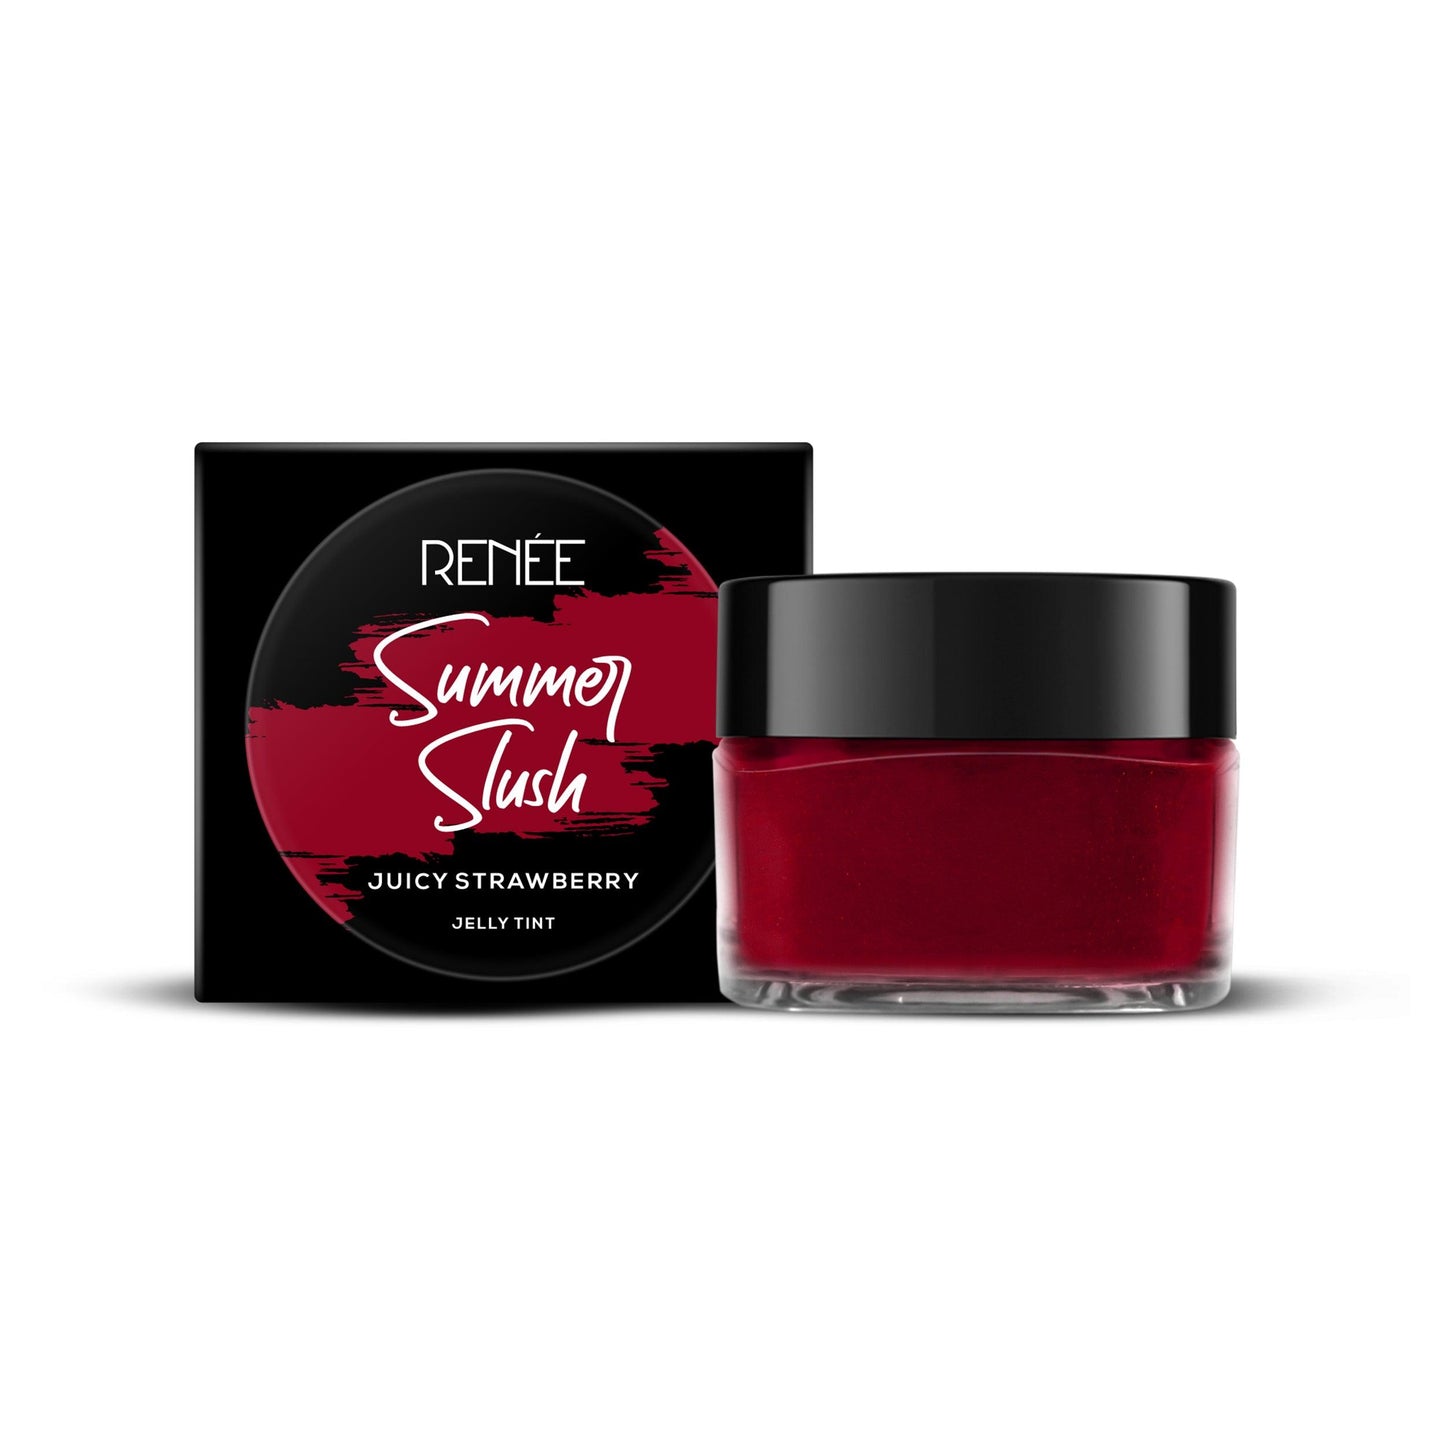 Renee Summer Slush Jelly Tint 13gm - Juicy Strawberry